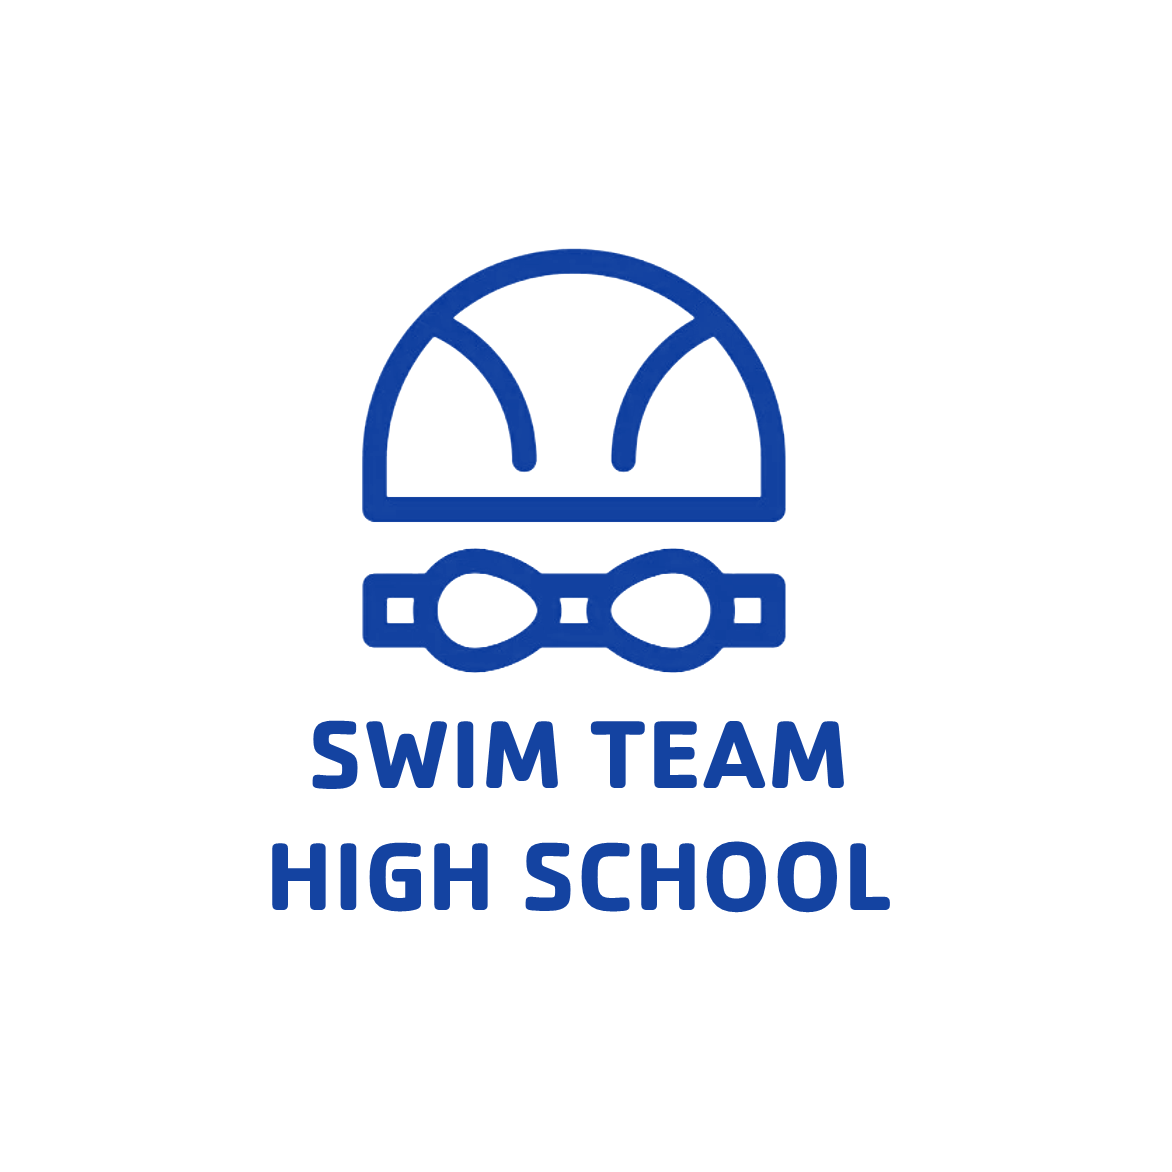 High School – Swim Team